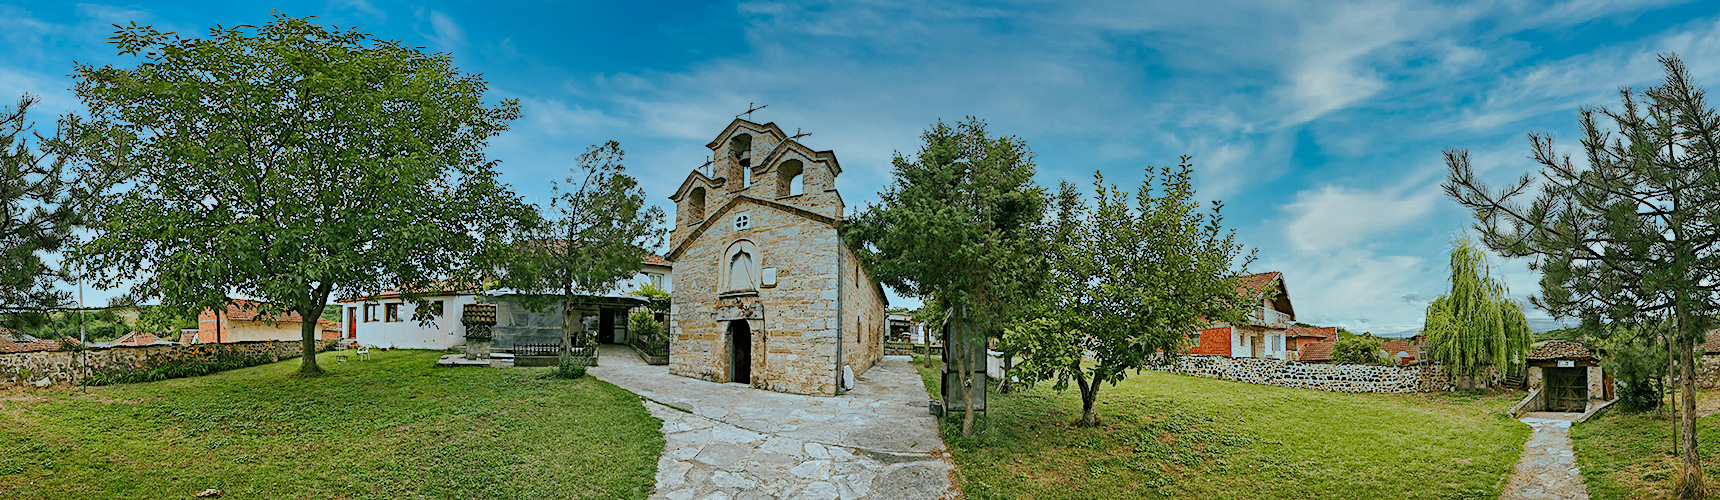 Church in Velika Hoca